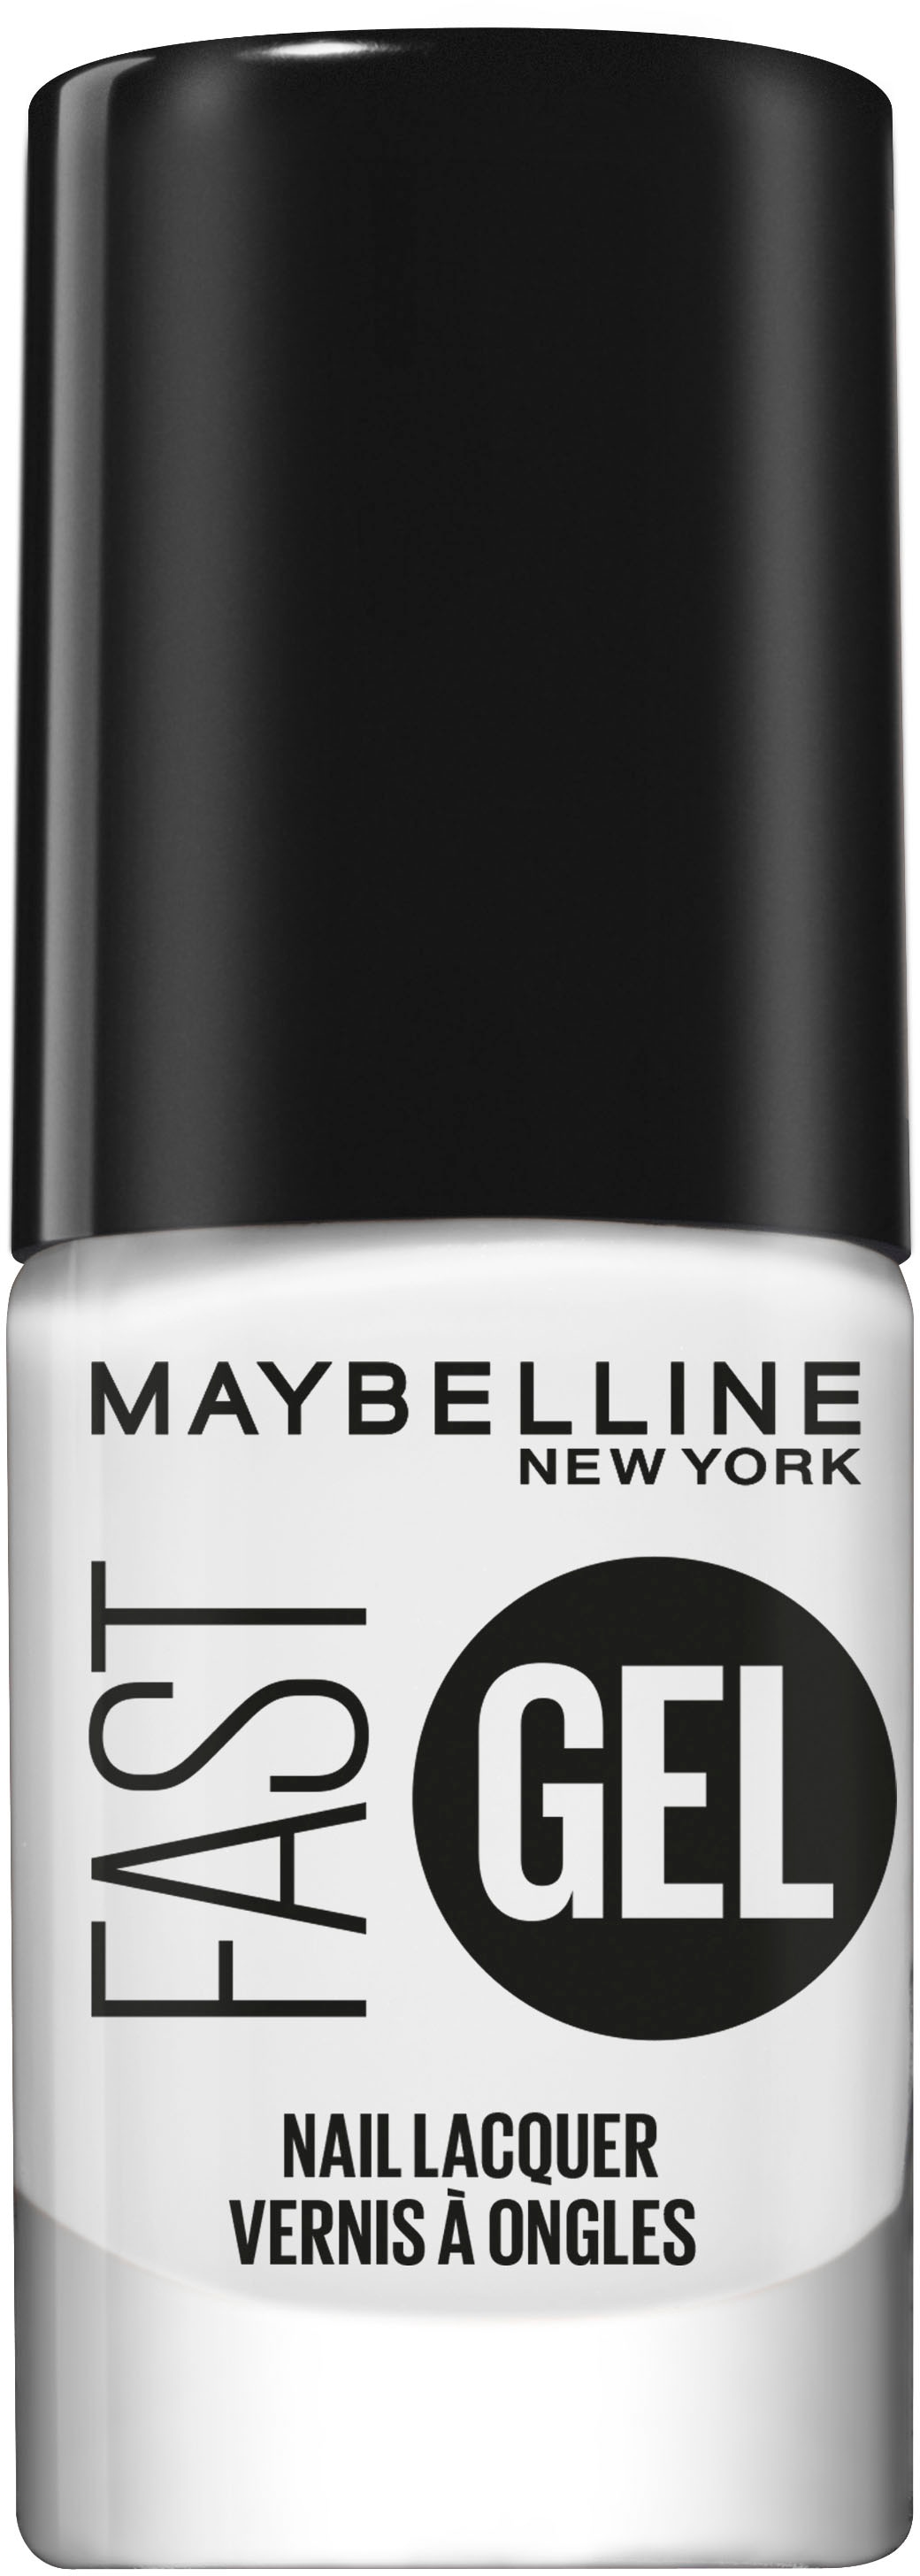 MAYBELLINE NEW YORK Kosmetik-Set »Fast Gel Nagellack Set«